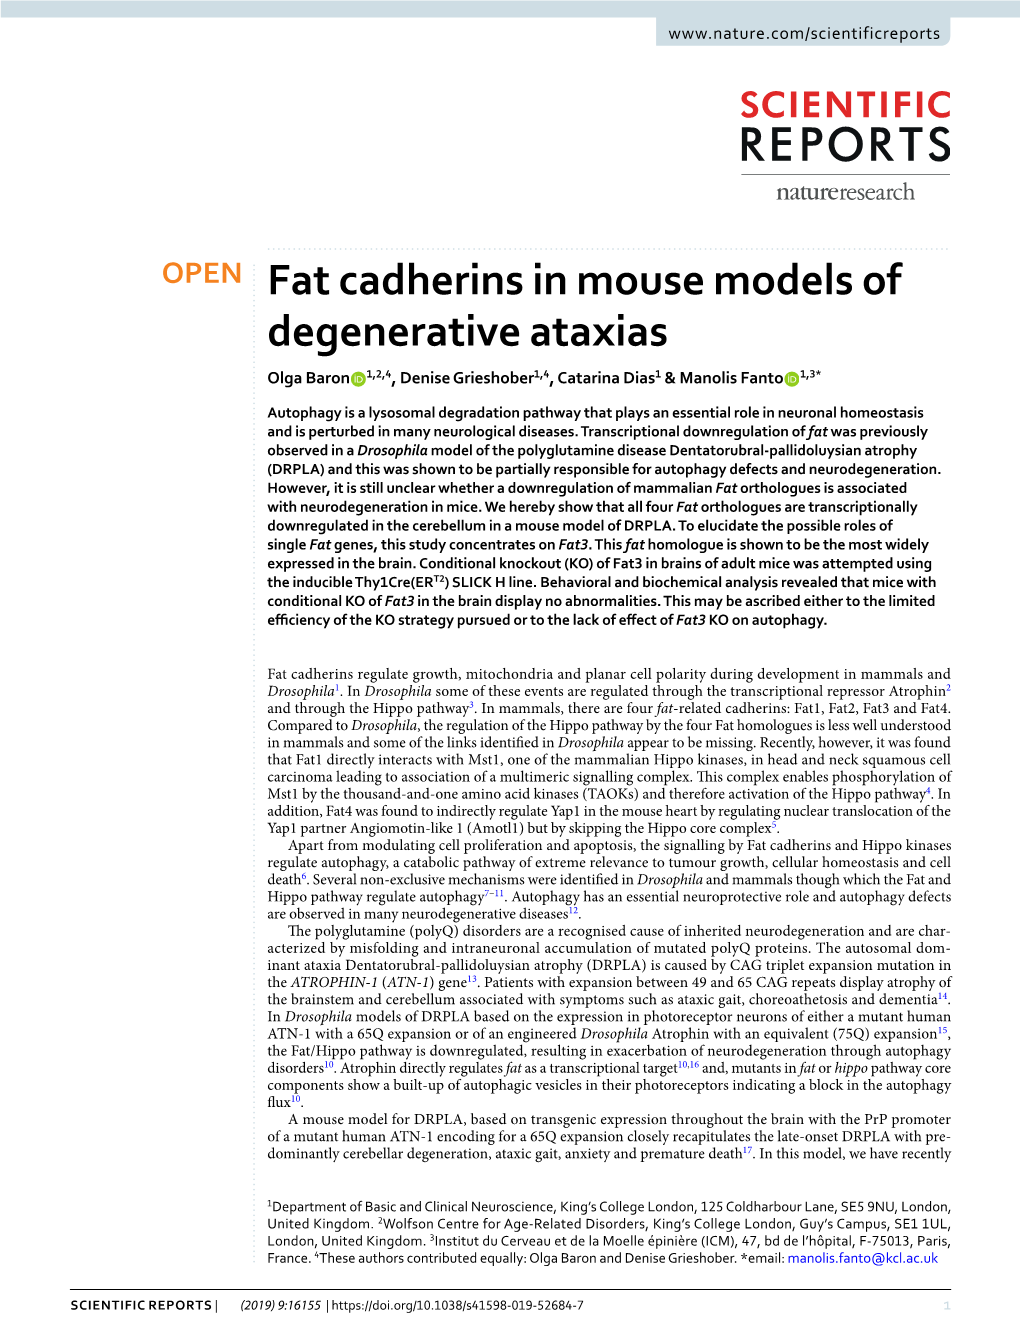 Fat Cadherins in Mouse Models of Degenerative Ataxias Olga Baron 1,2,4, Denise Grieshober1,4, Catarina Dias1 & Manolis Fanto 1,3*